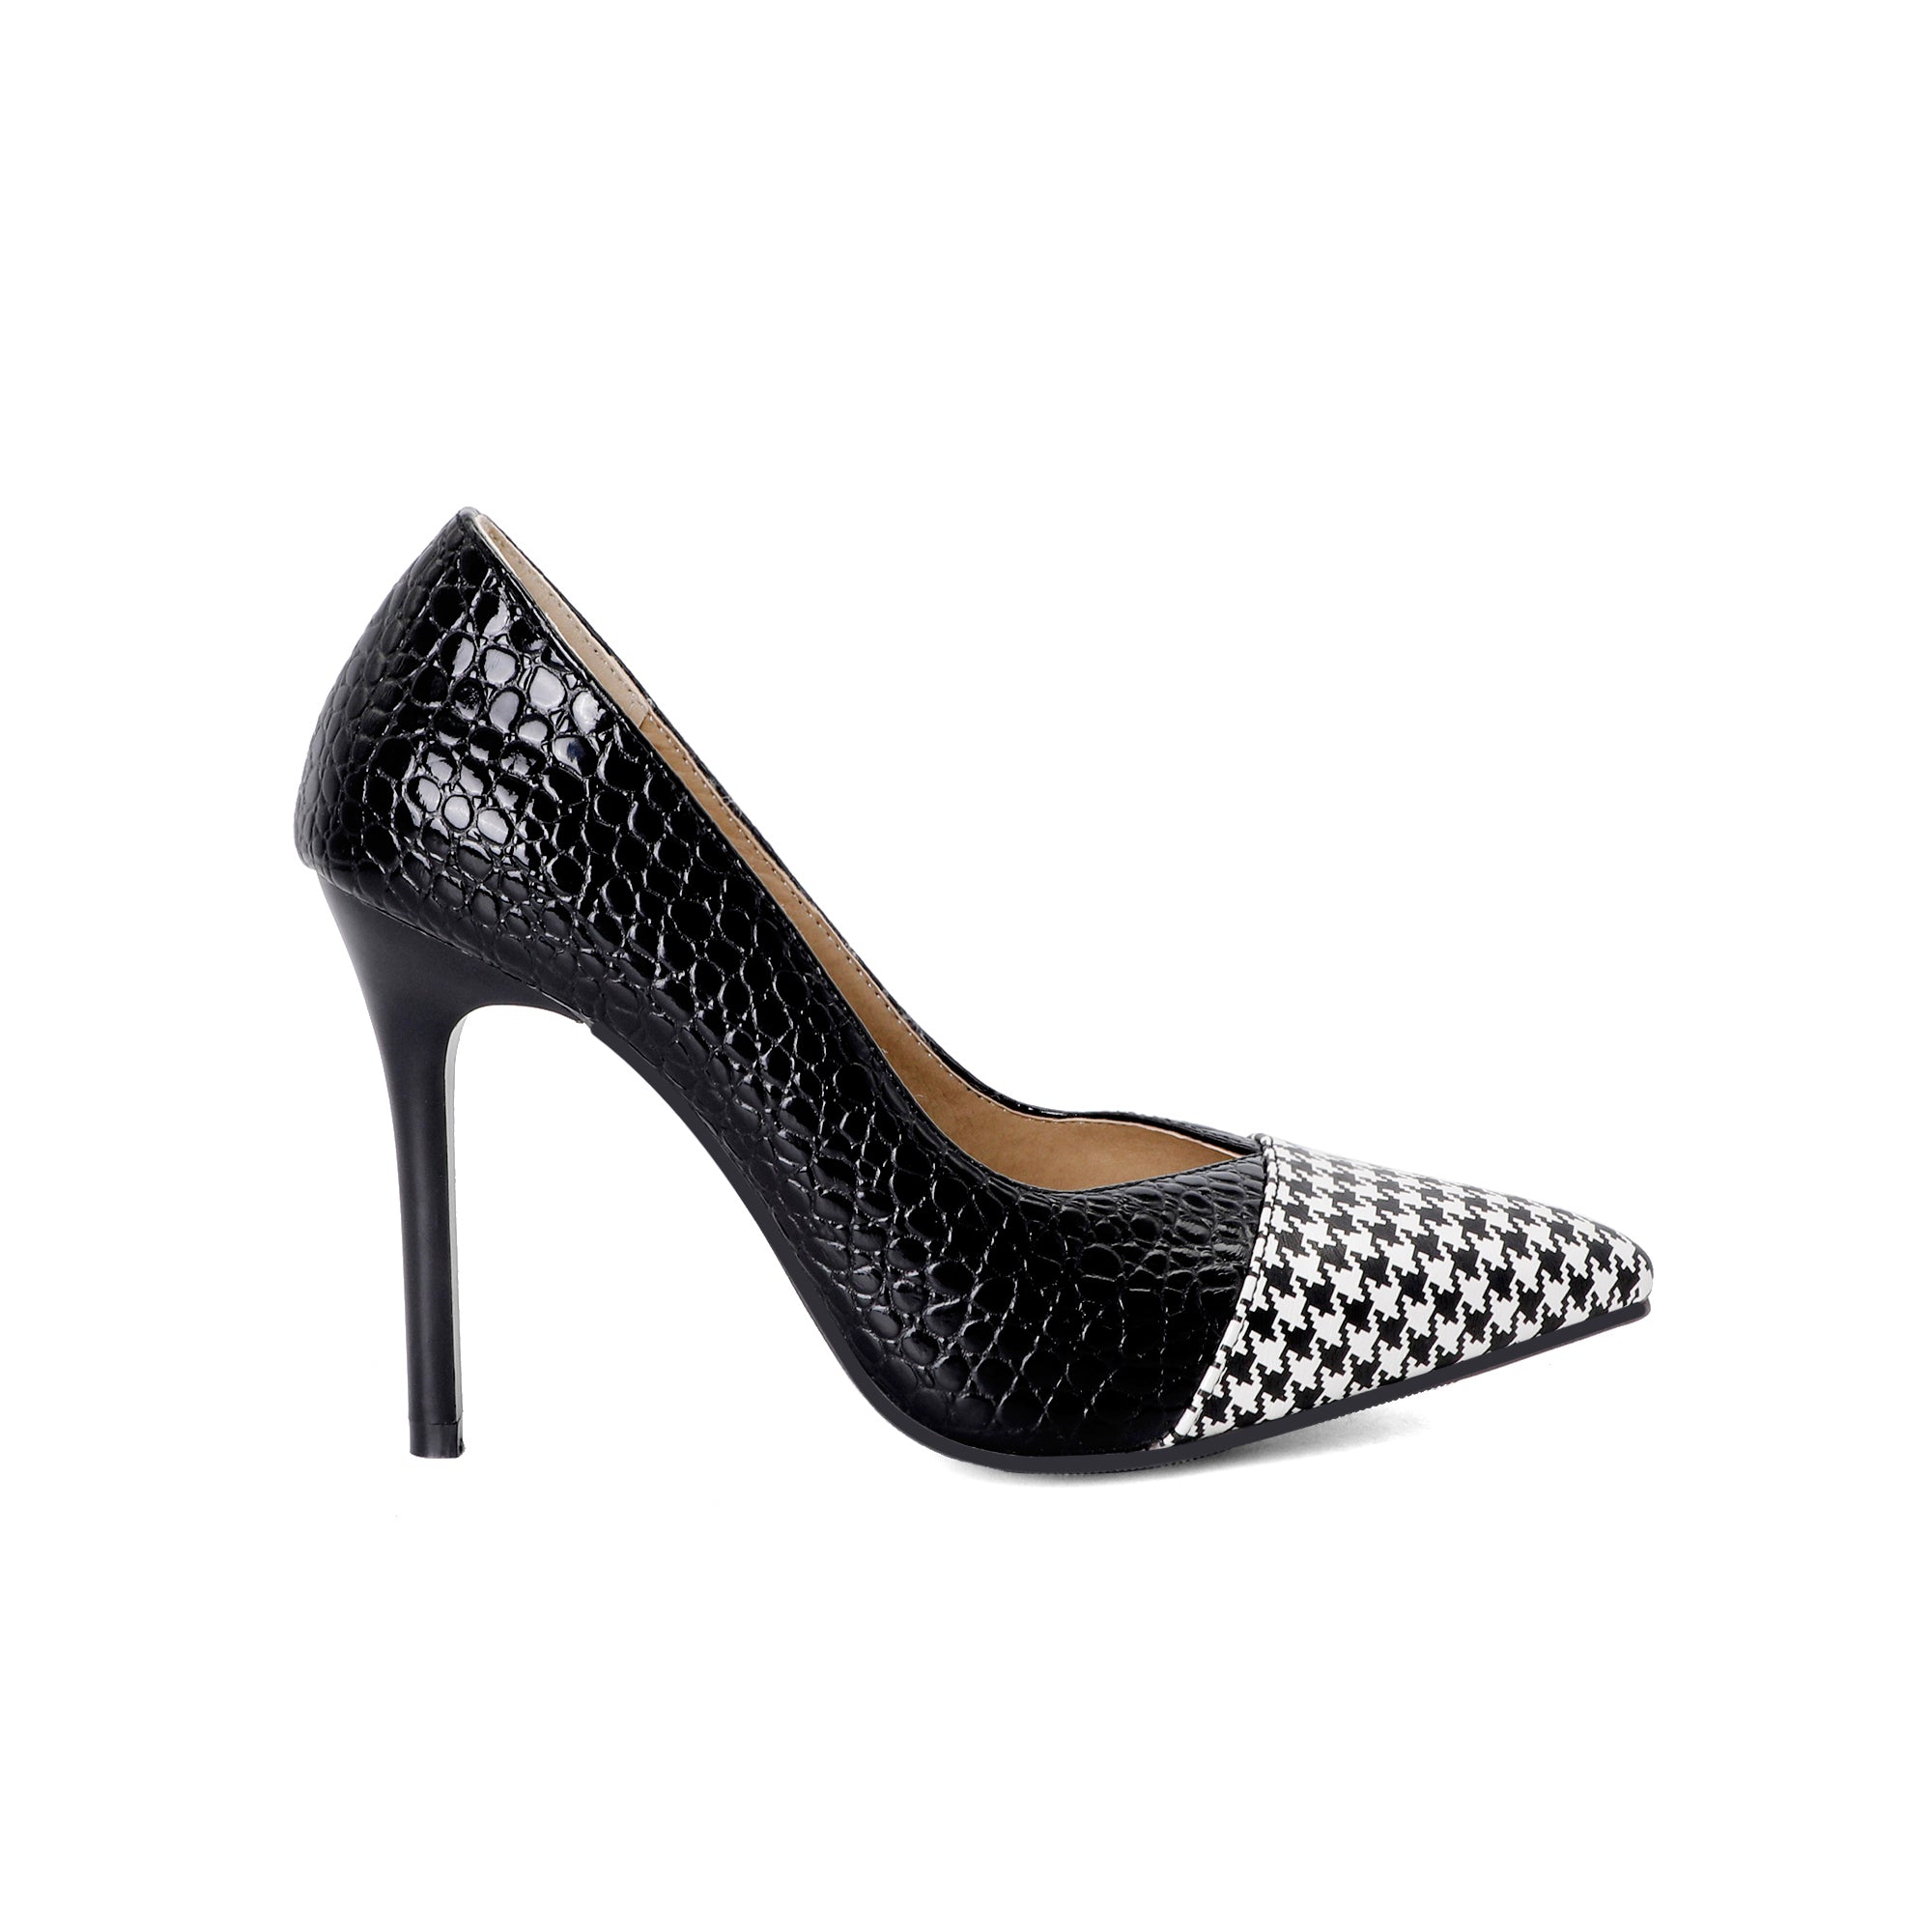 Bigsizeheels Houndstooth spliced pointy heels - Black freeshipping - bigsizeheel®-size5-size15 -All Plus Sizes Available!